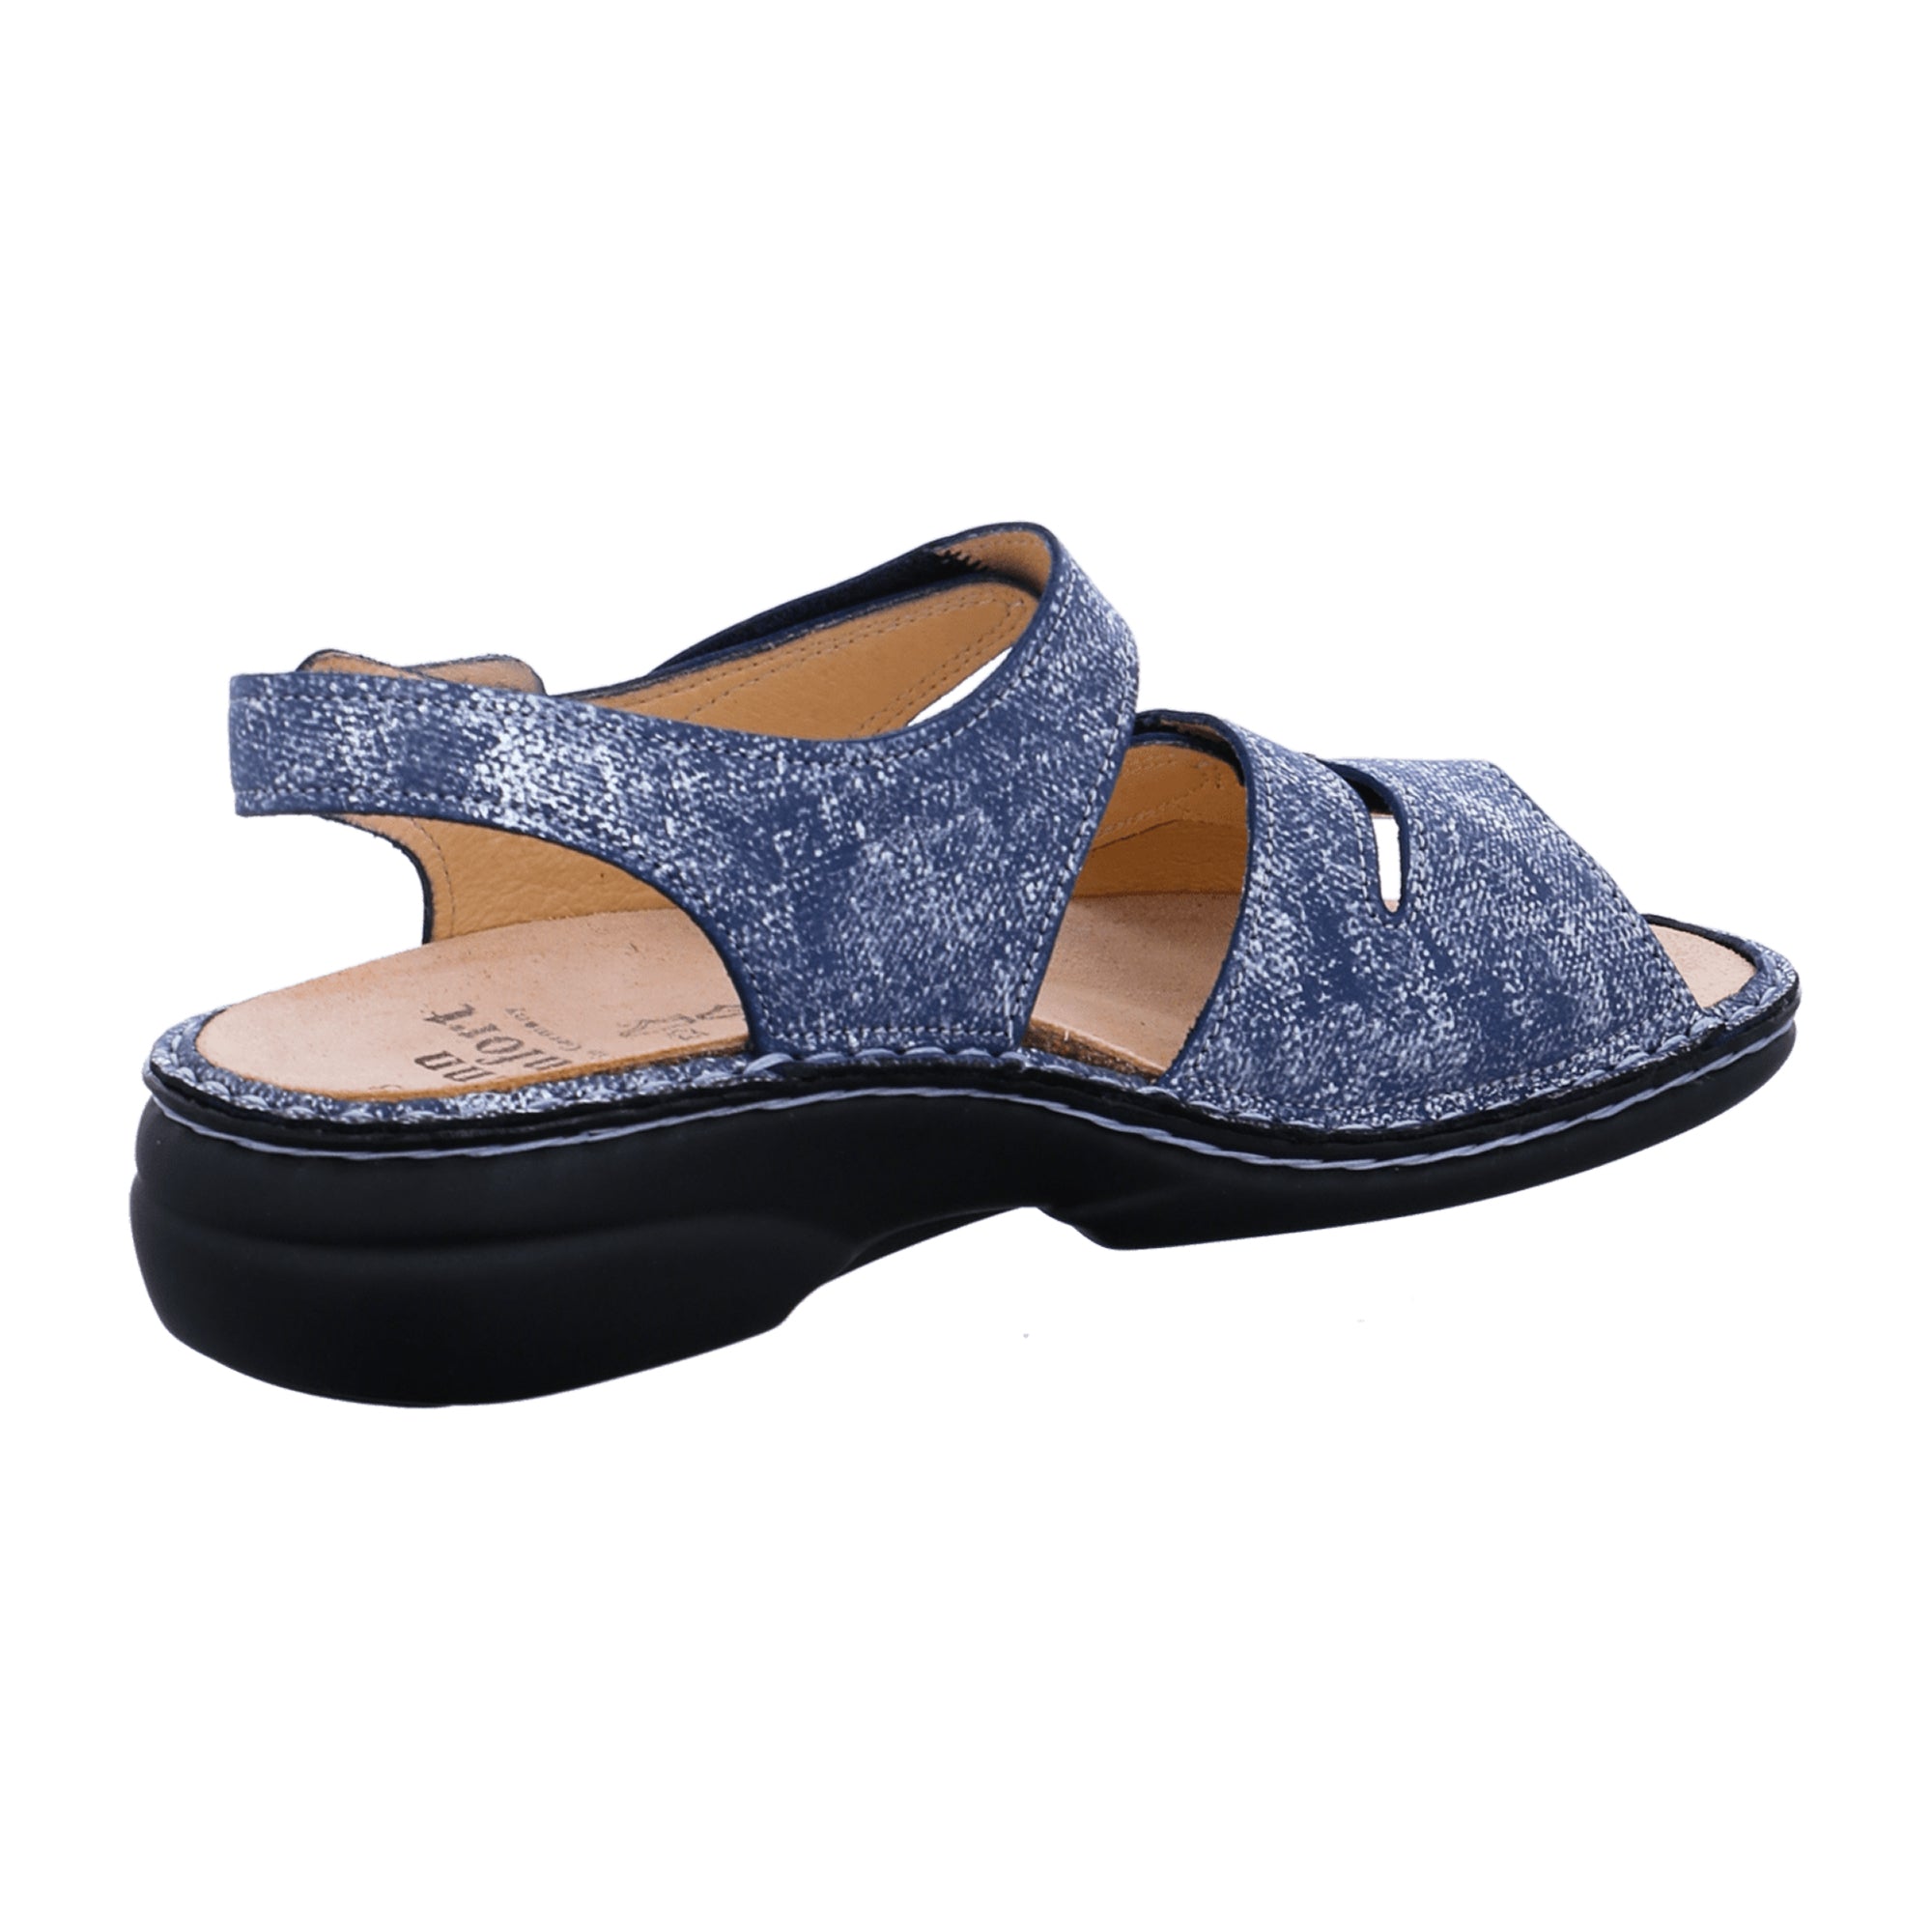 Finn Comfort Gomera Women's Sandals - Stylish & Comfortable Blue Leather